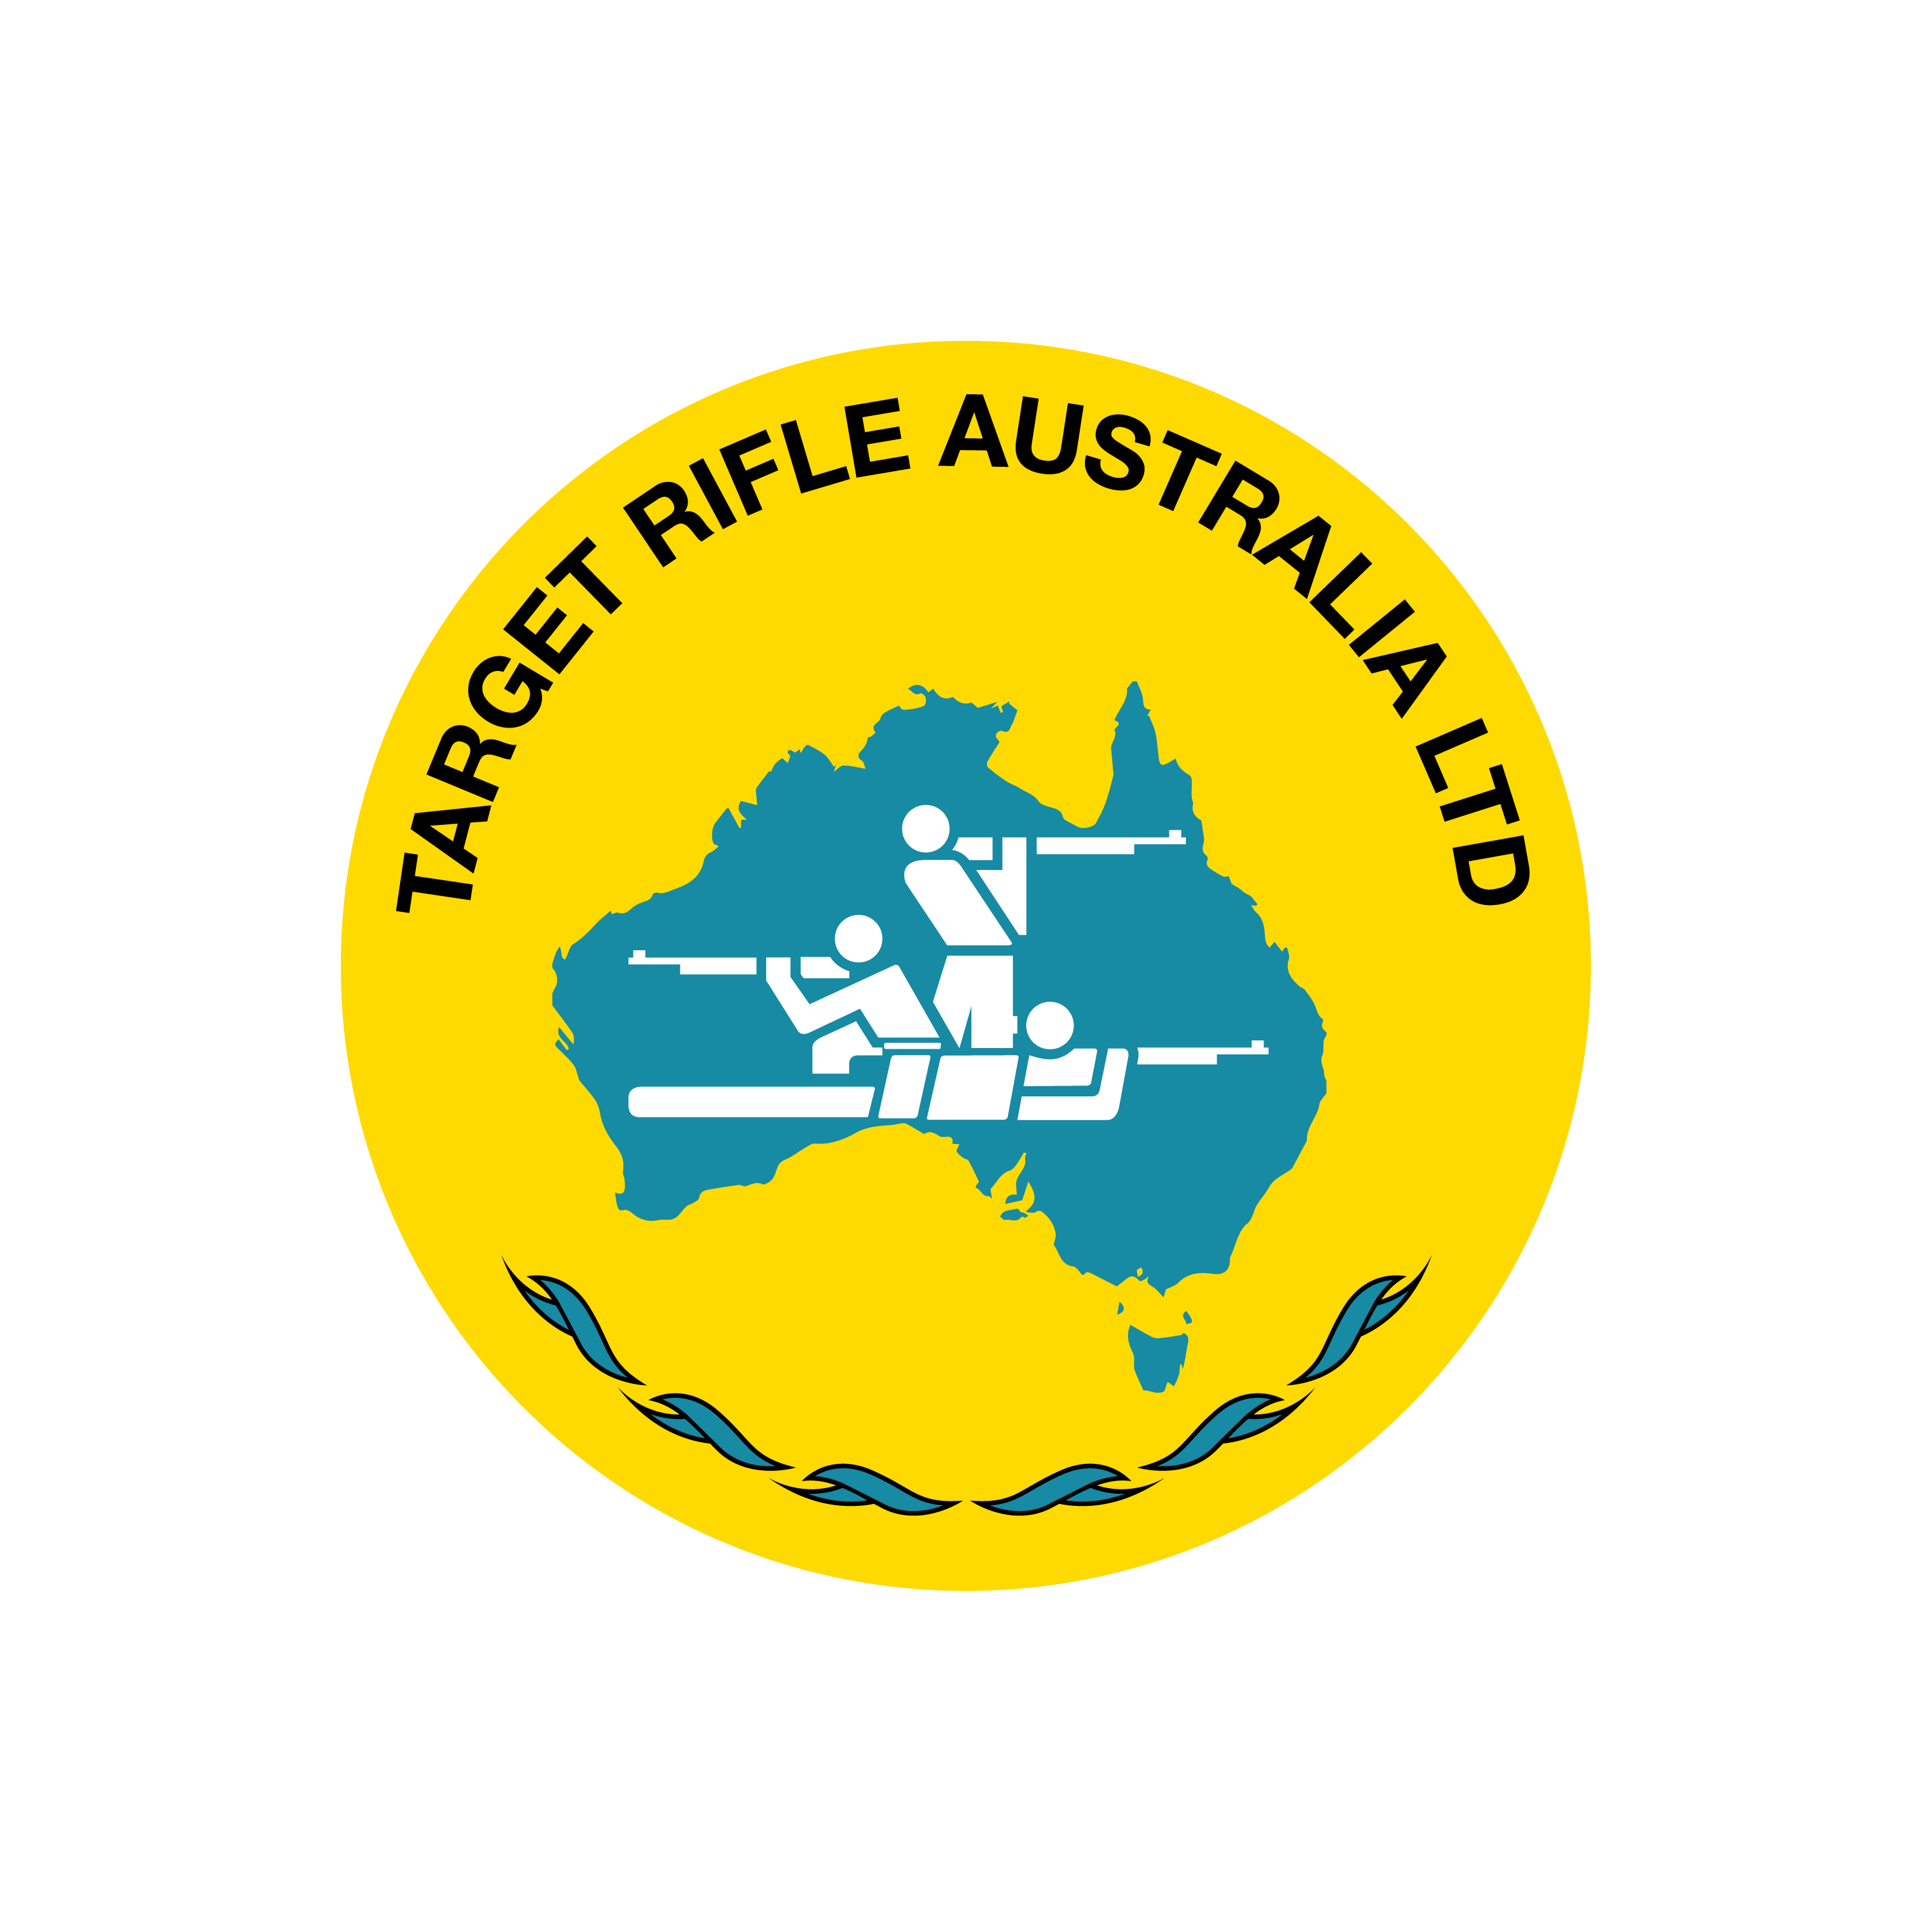 Target Rifle Australia